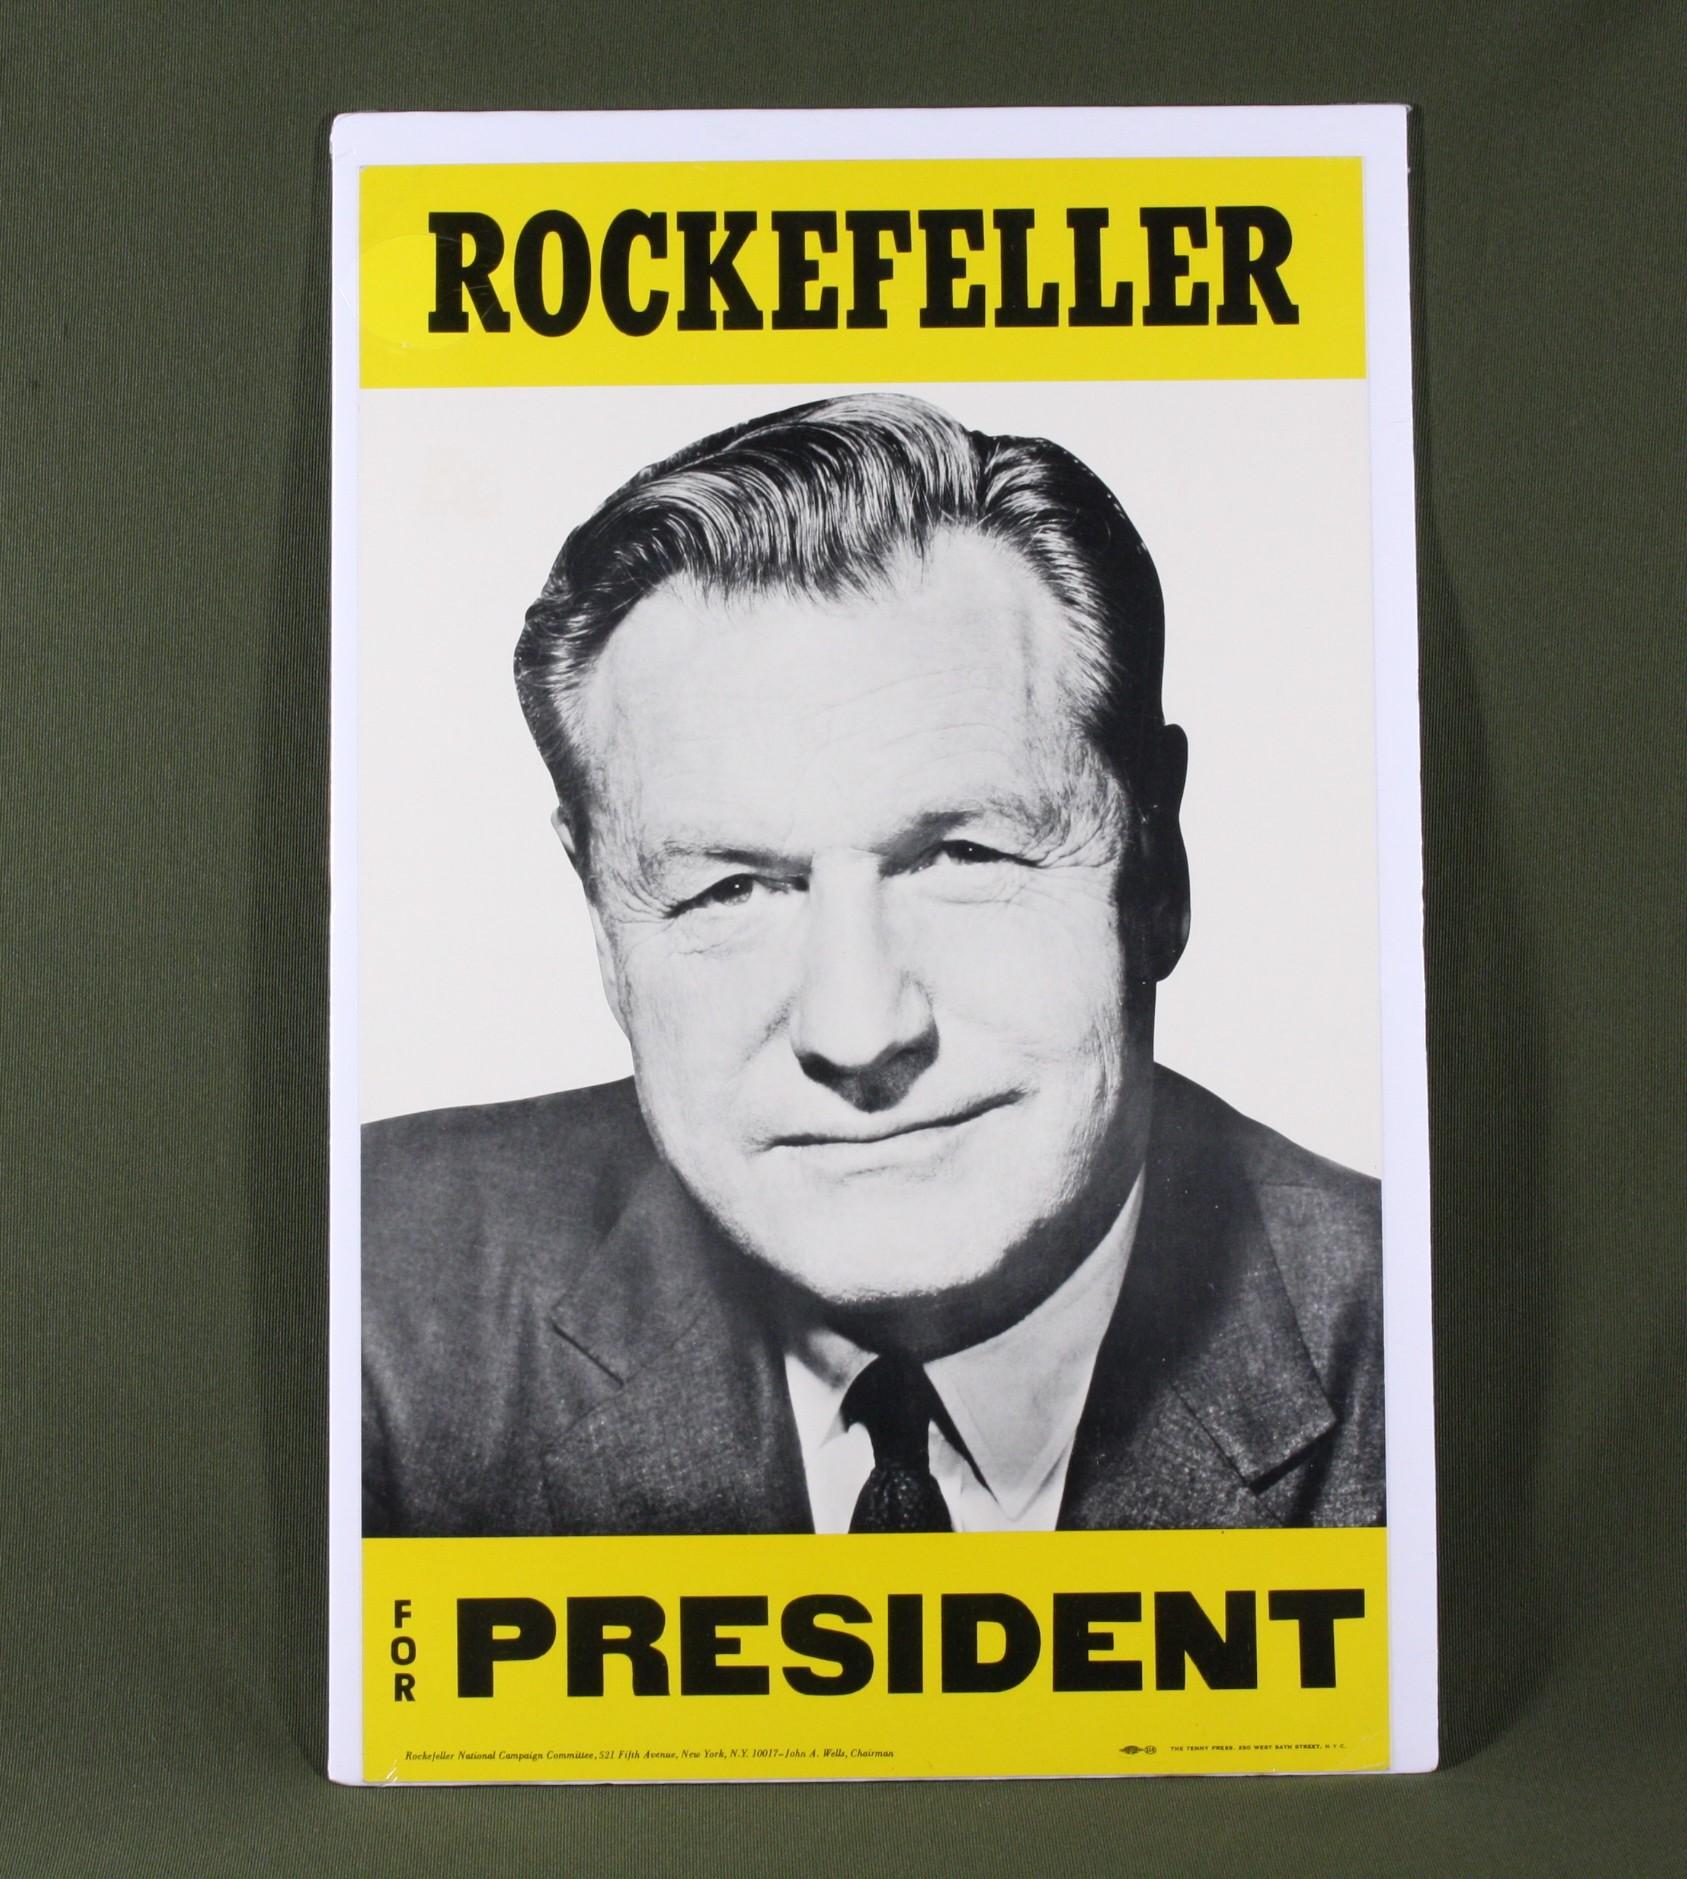 1960’s “Rockefeller for President” campaign poster